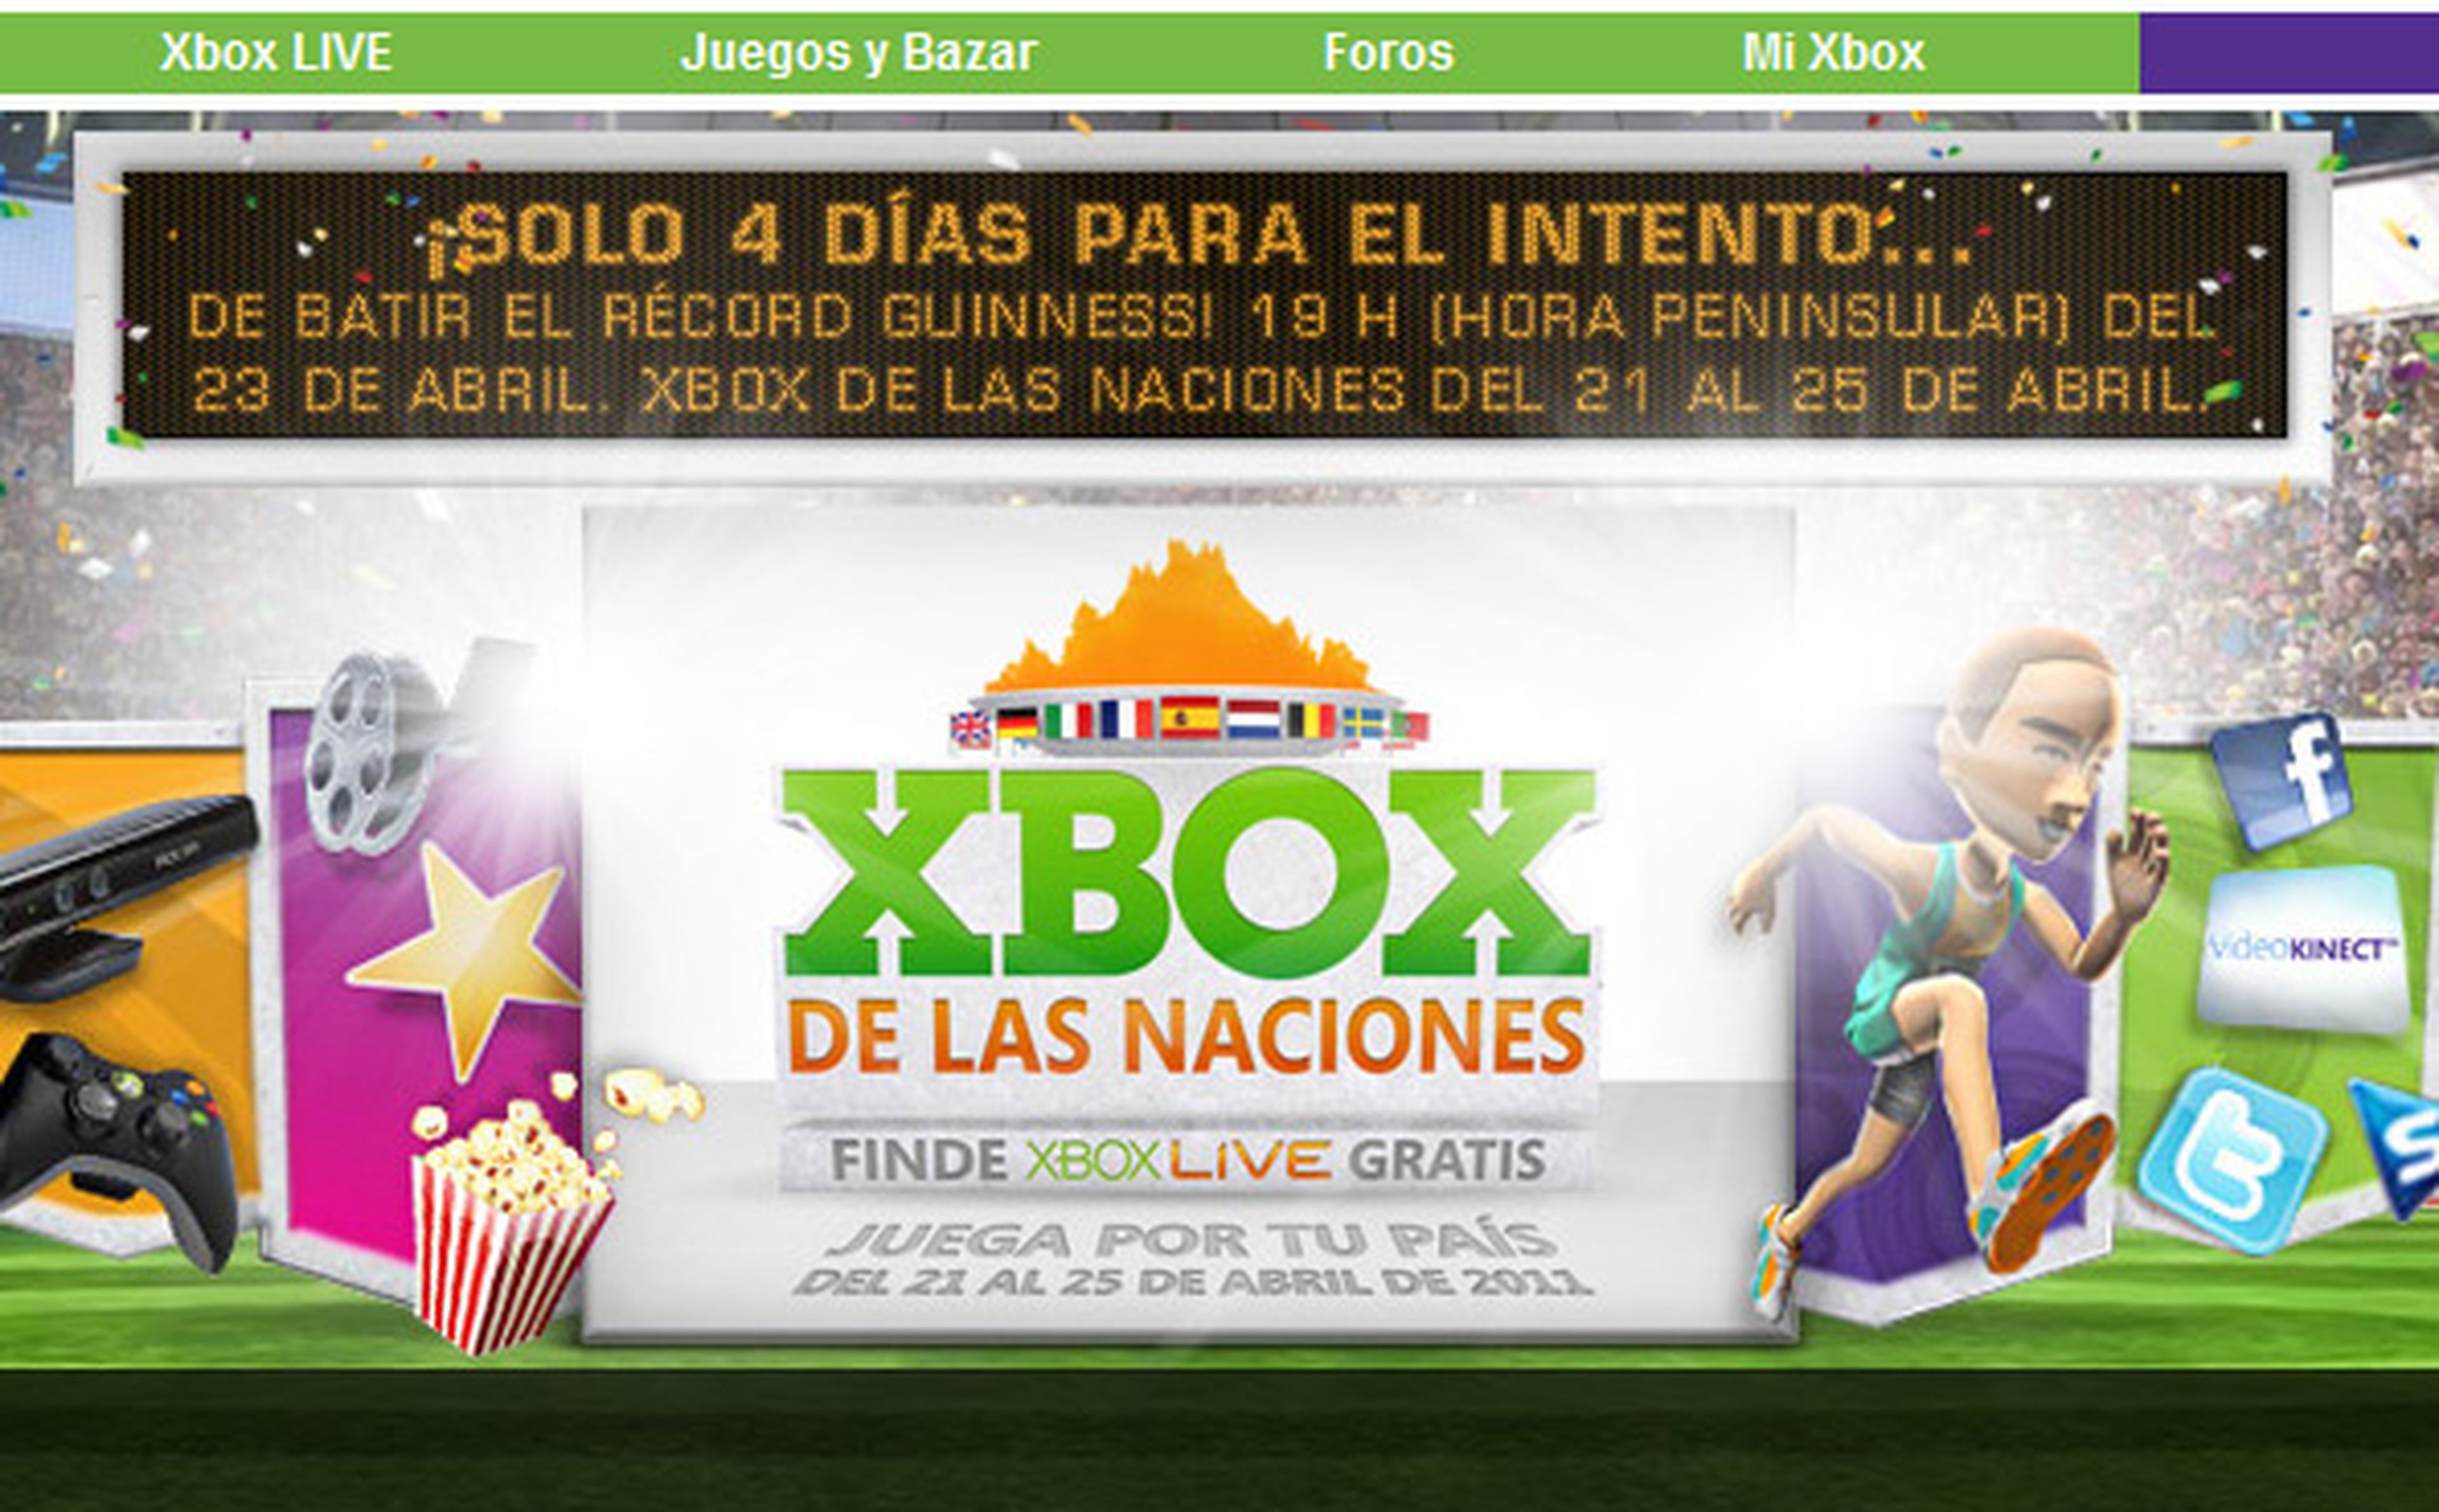 Semana Santa de Xbox LIVE gratis